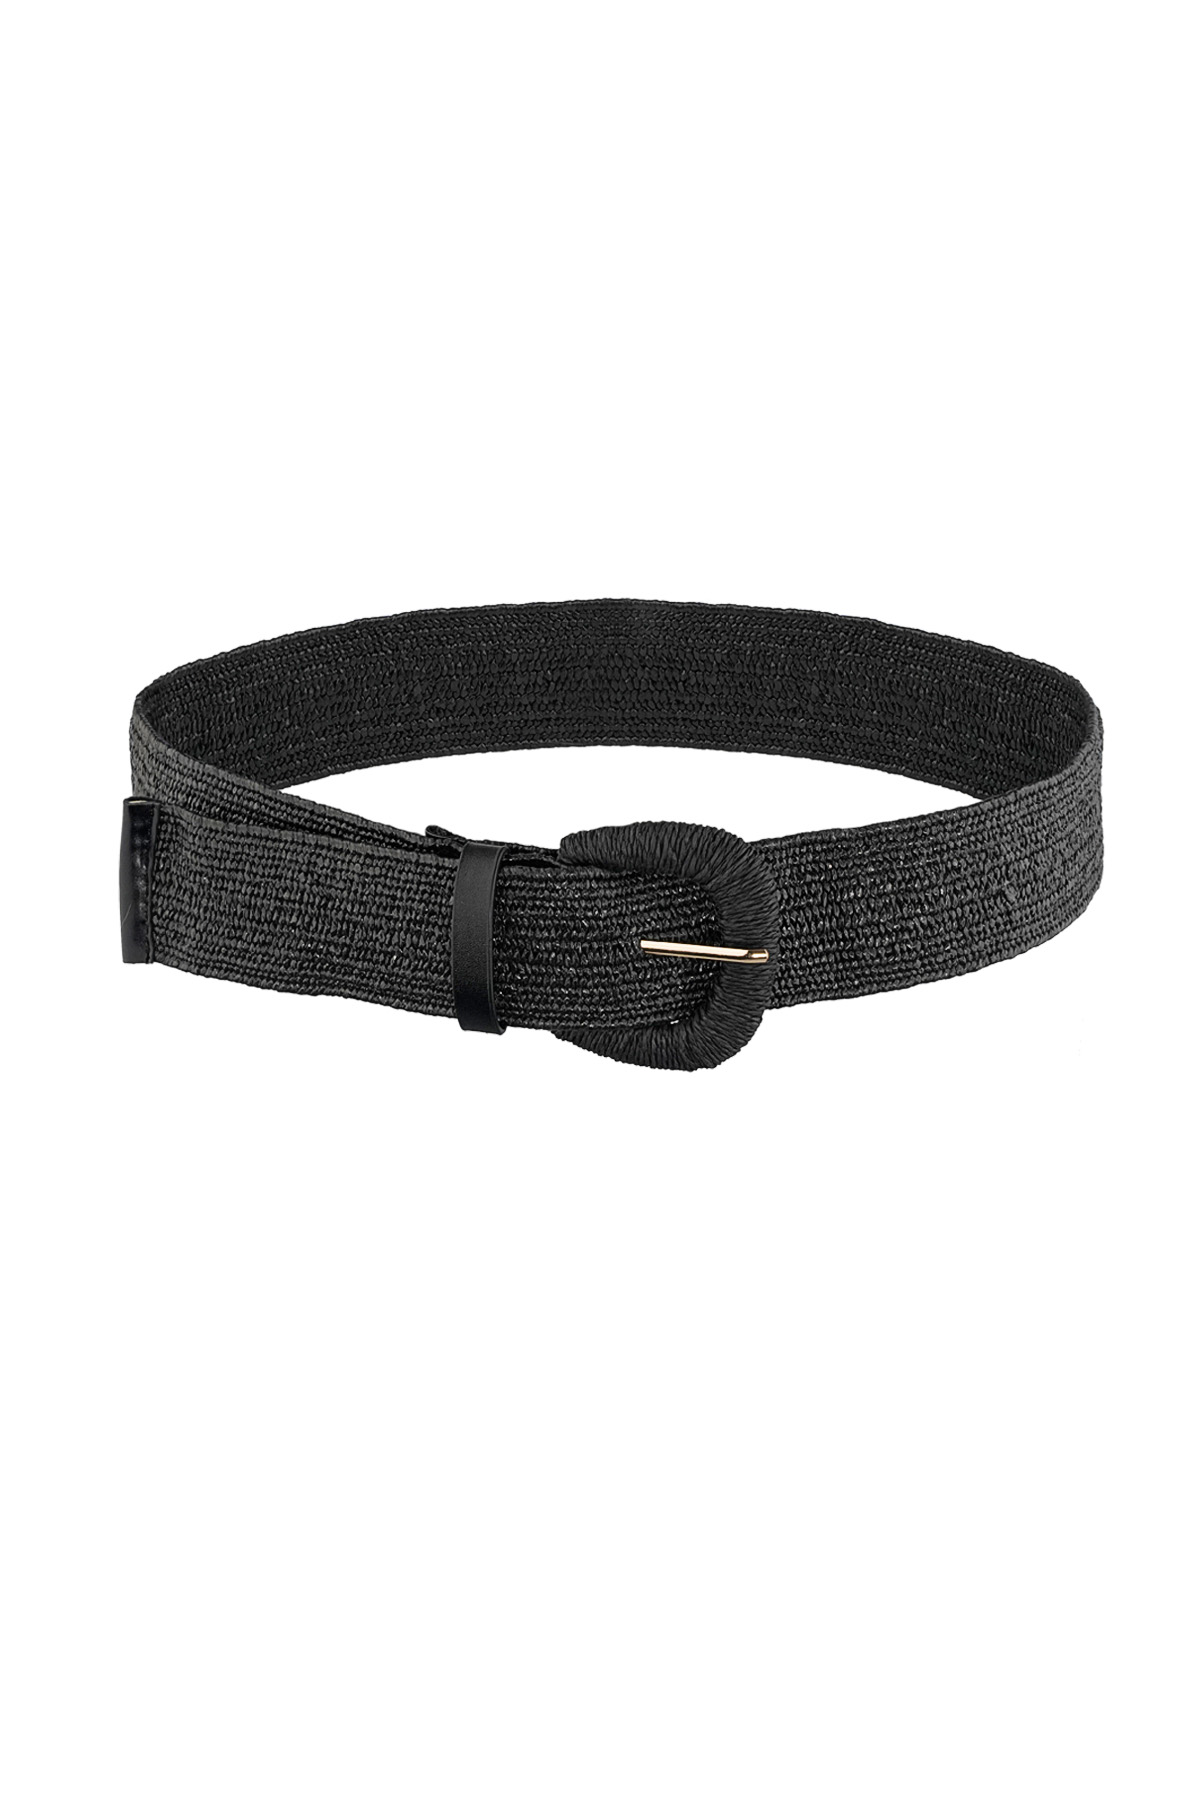 Chic belt - black h5 